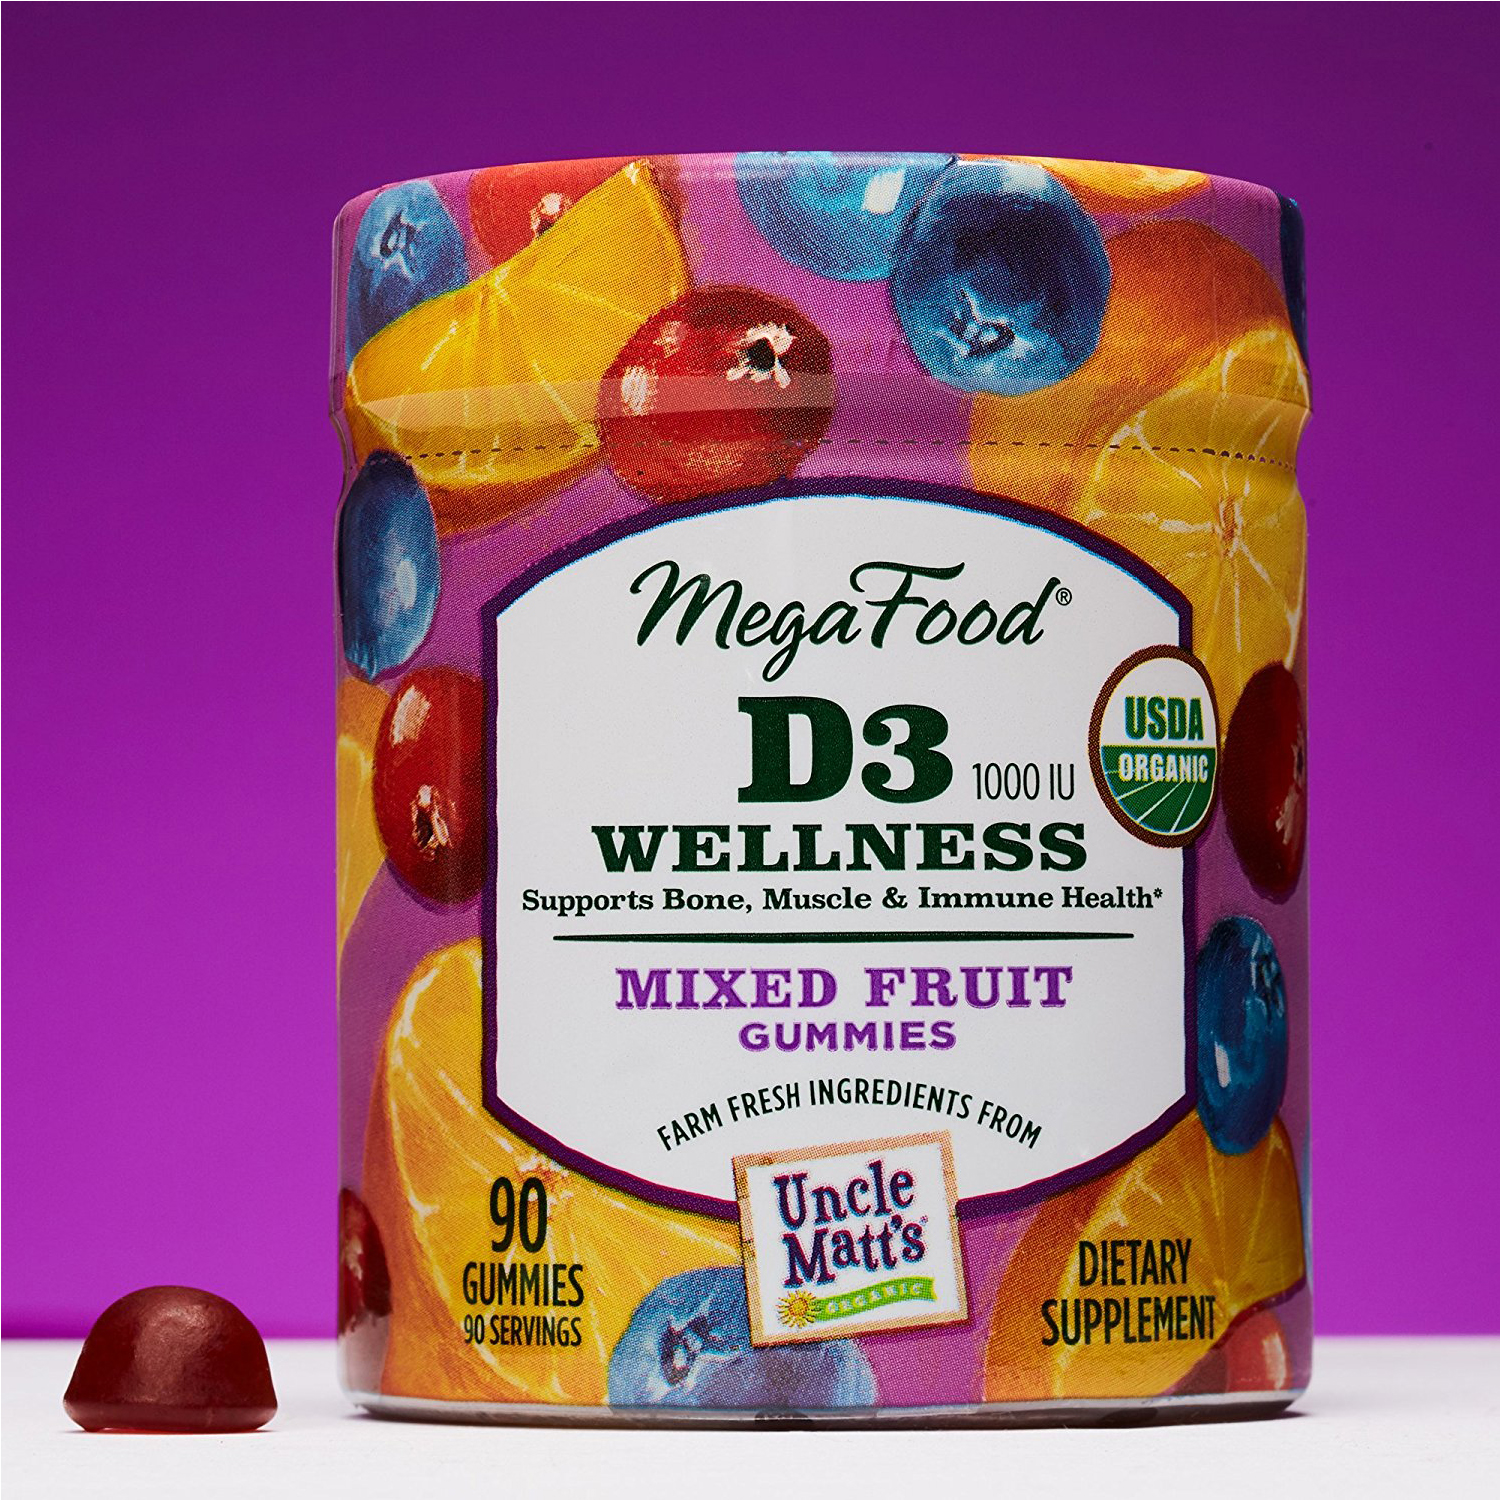 MegaFood D3 (1000 IU) Wellness Gummies, Mixed Fruit, 90 Gummies Holly